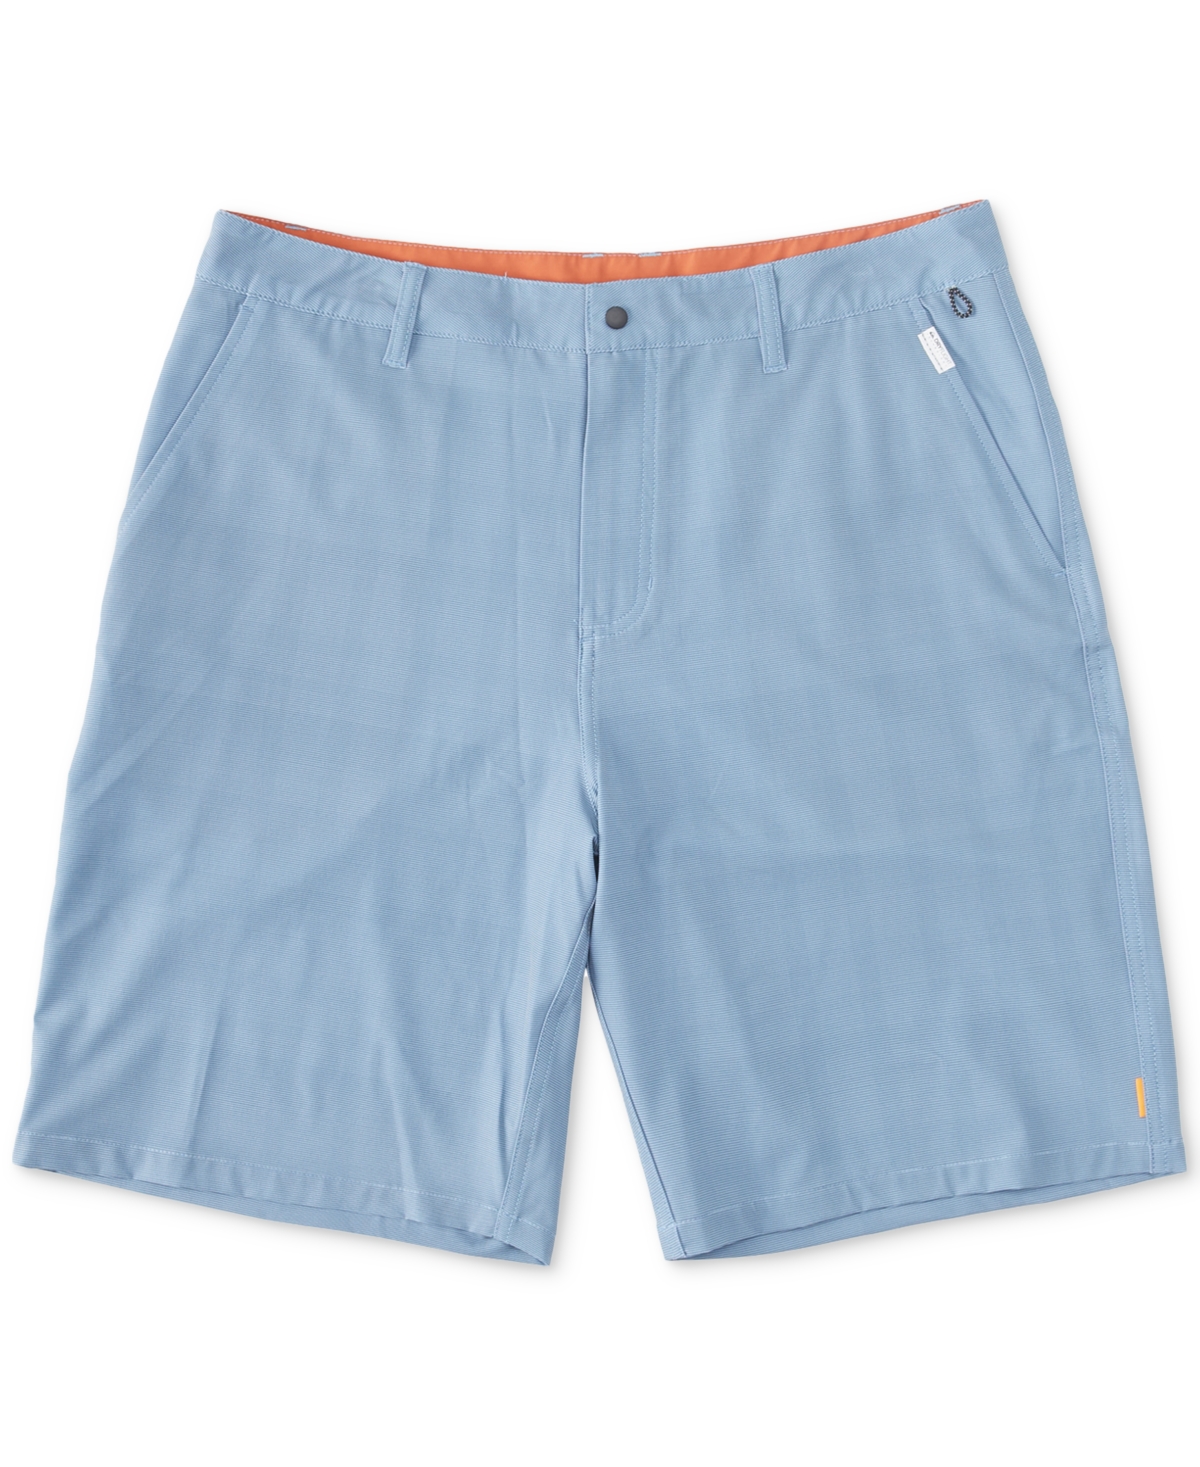 Men's Backwater Amphibian Hybrid Shorts - Ensign Blue